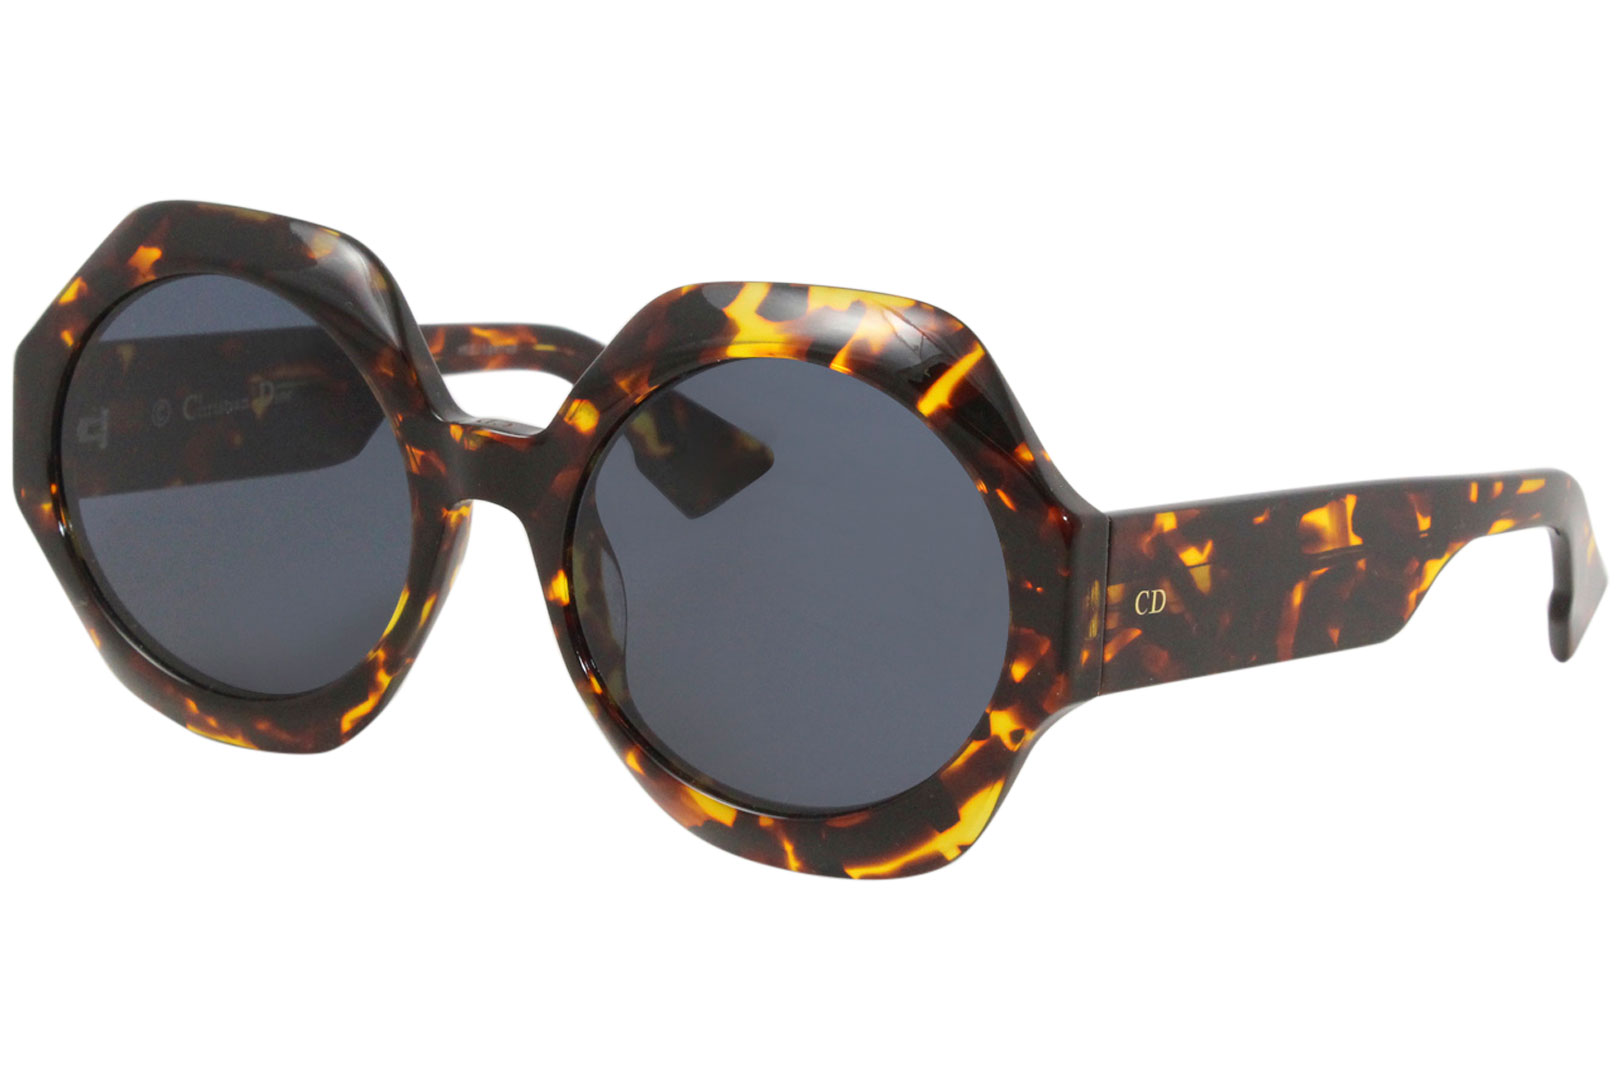 Dior  Accessories  Dior Spirit Sunglasses 58mm  Poshmark